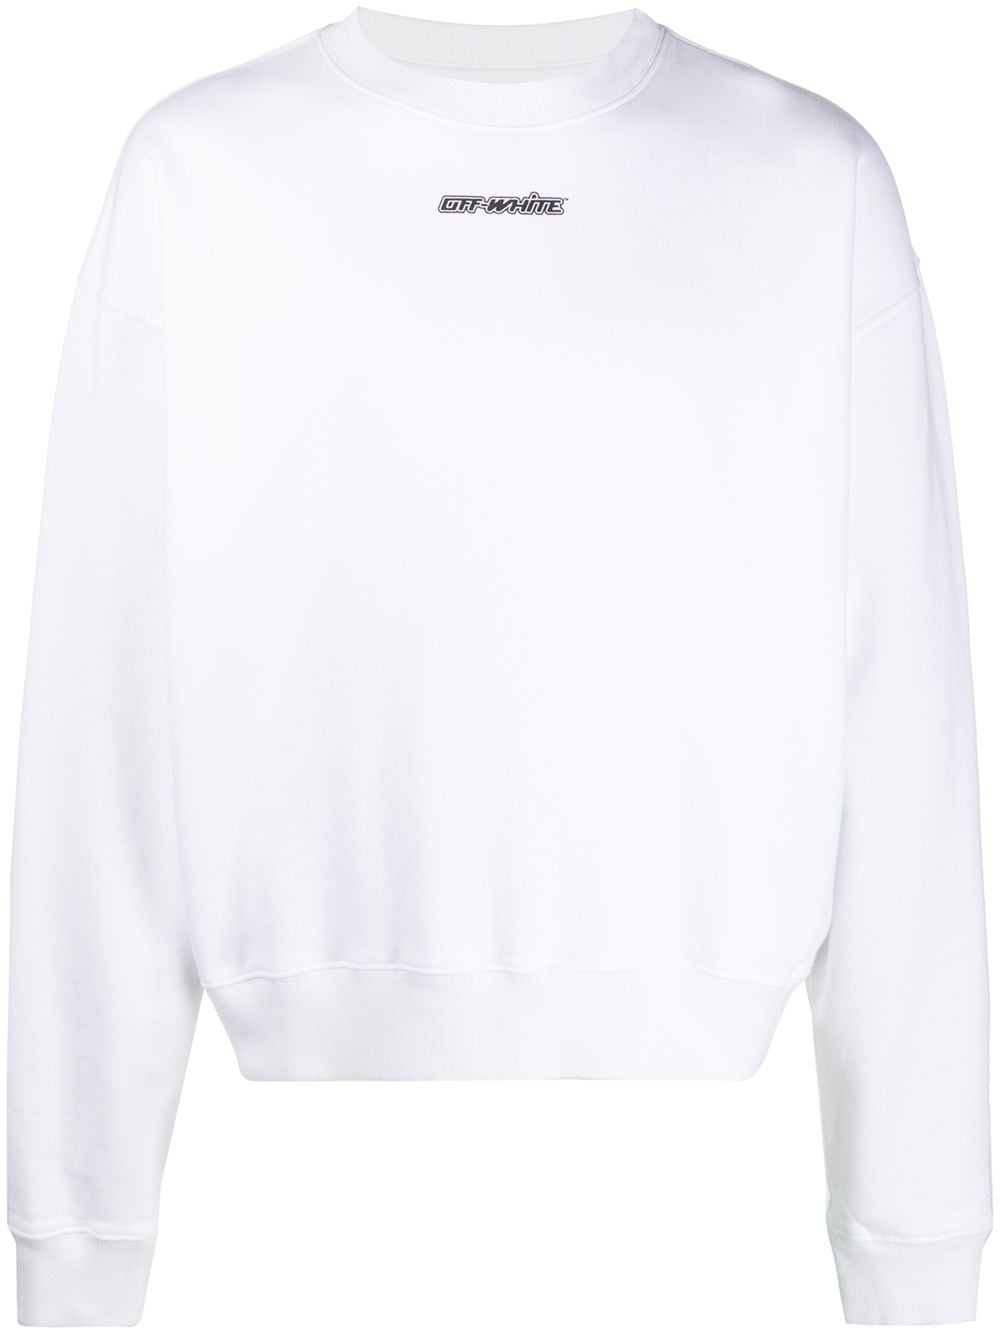 OFF-WHITE Oversize Fit Marker Arrows Crewneck Sweatshirt White/Blue